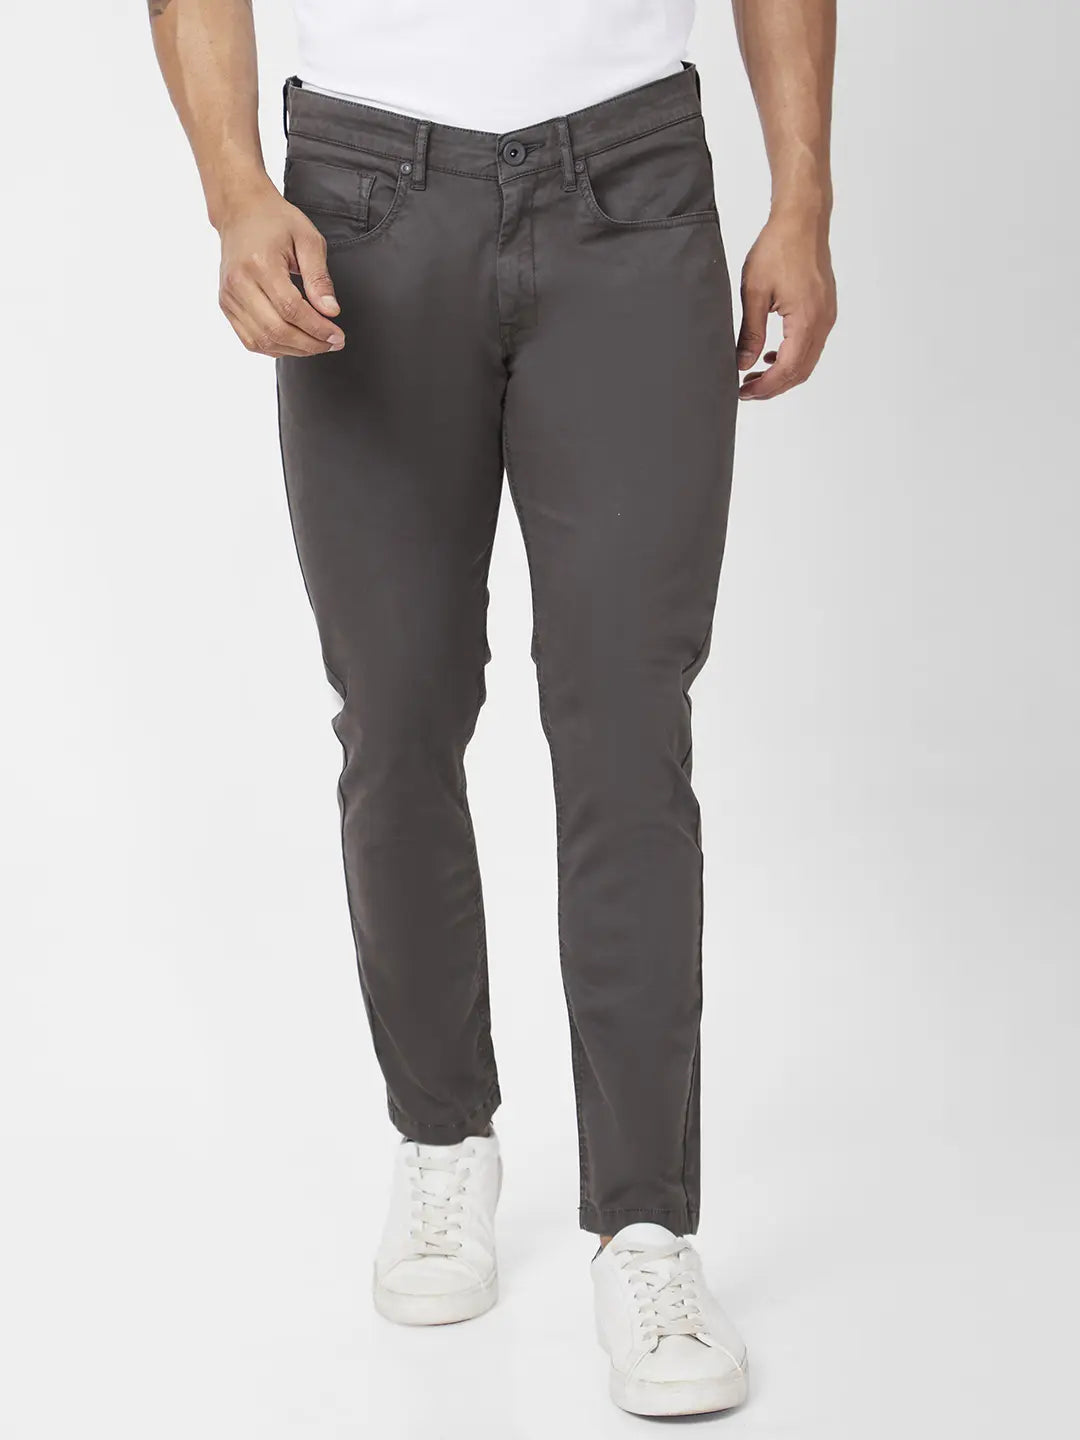 92% OFF on HIGHLANDER Men Grey Tapered Fit Solid Regular Trousers on Myntra  | PaisaWapas.com